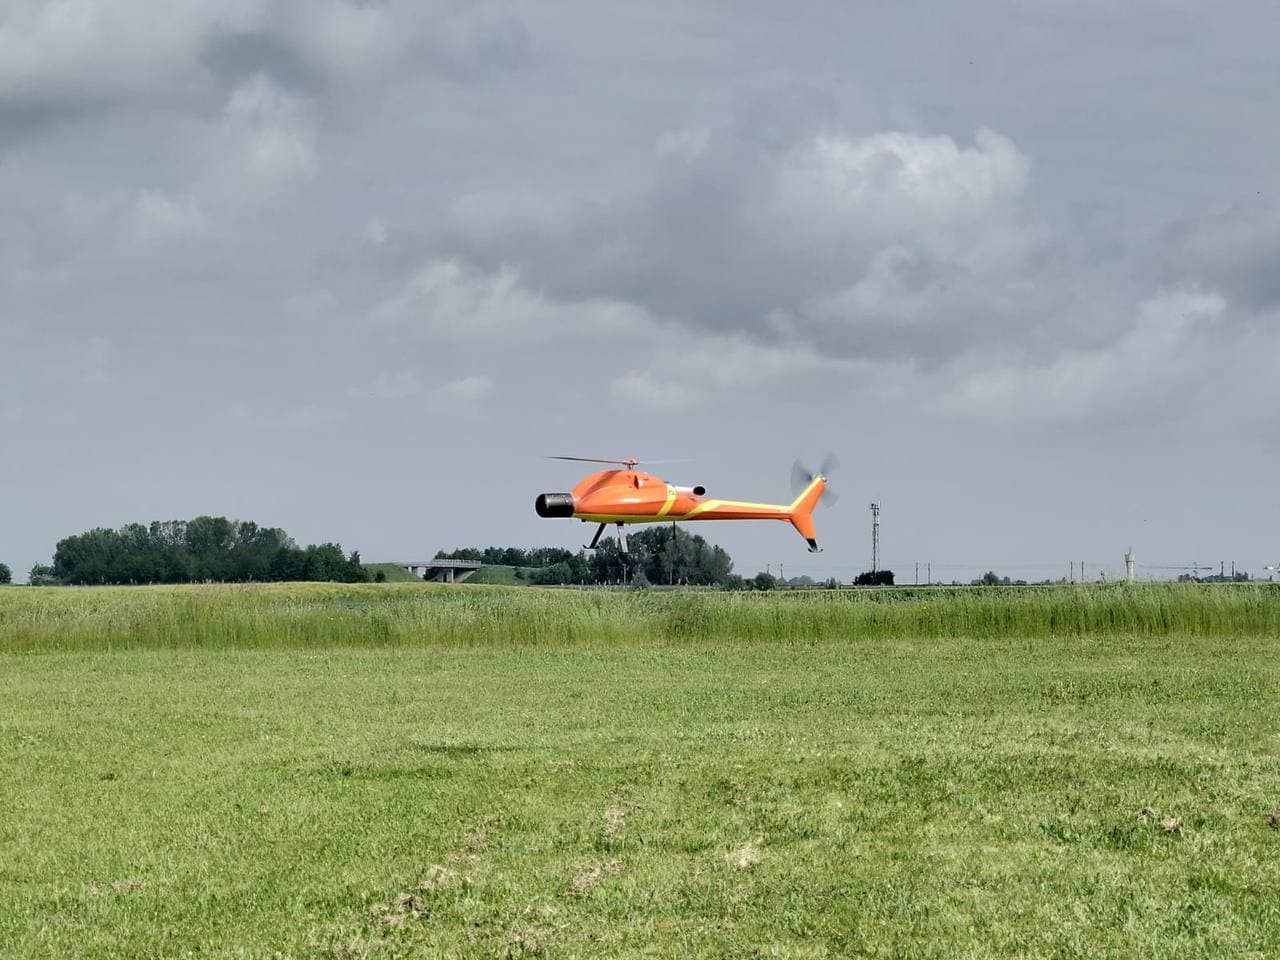 PEN55V-001 Flight Test for Take-off and Landing